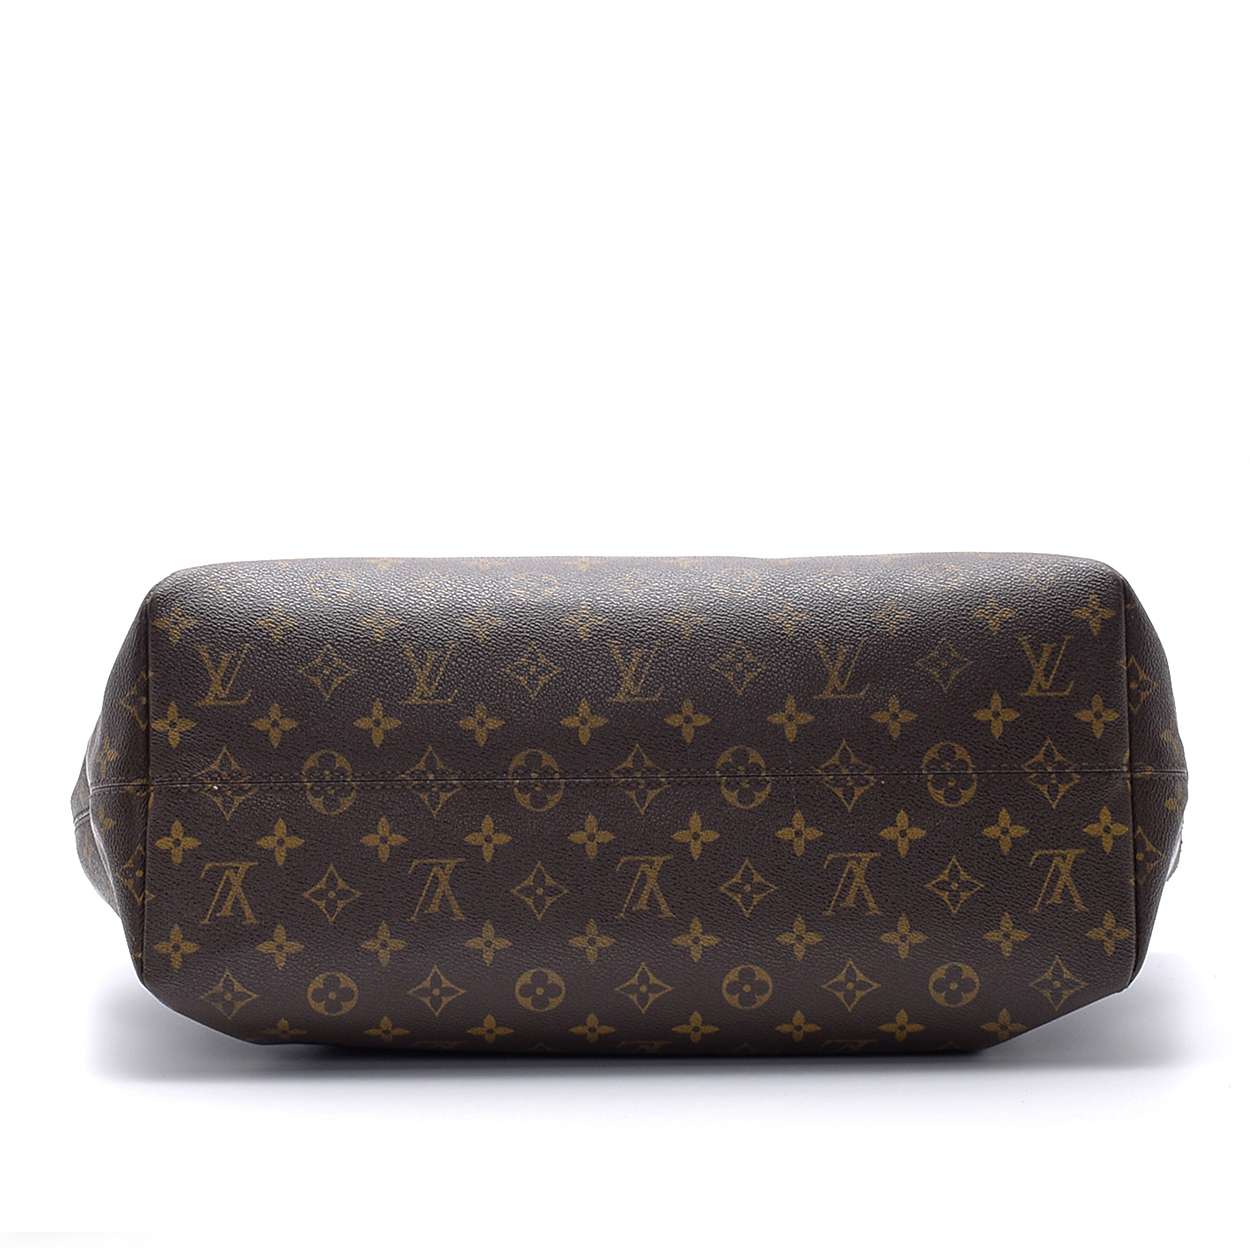 Louis Vuitton - Monogram Canvas Leather Raspail Gm Bag 